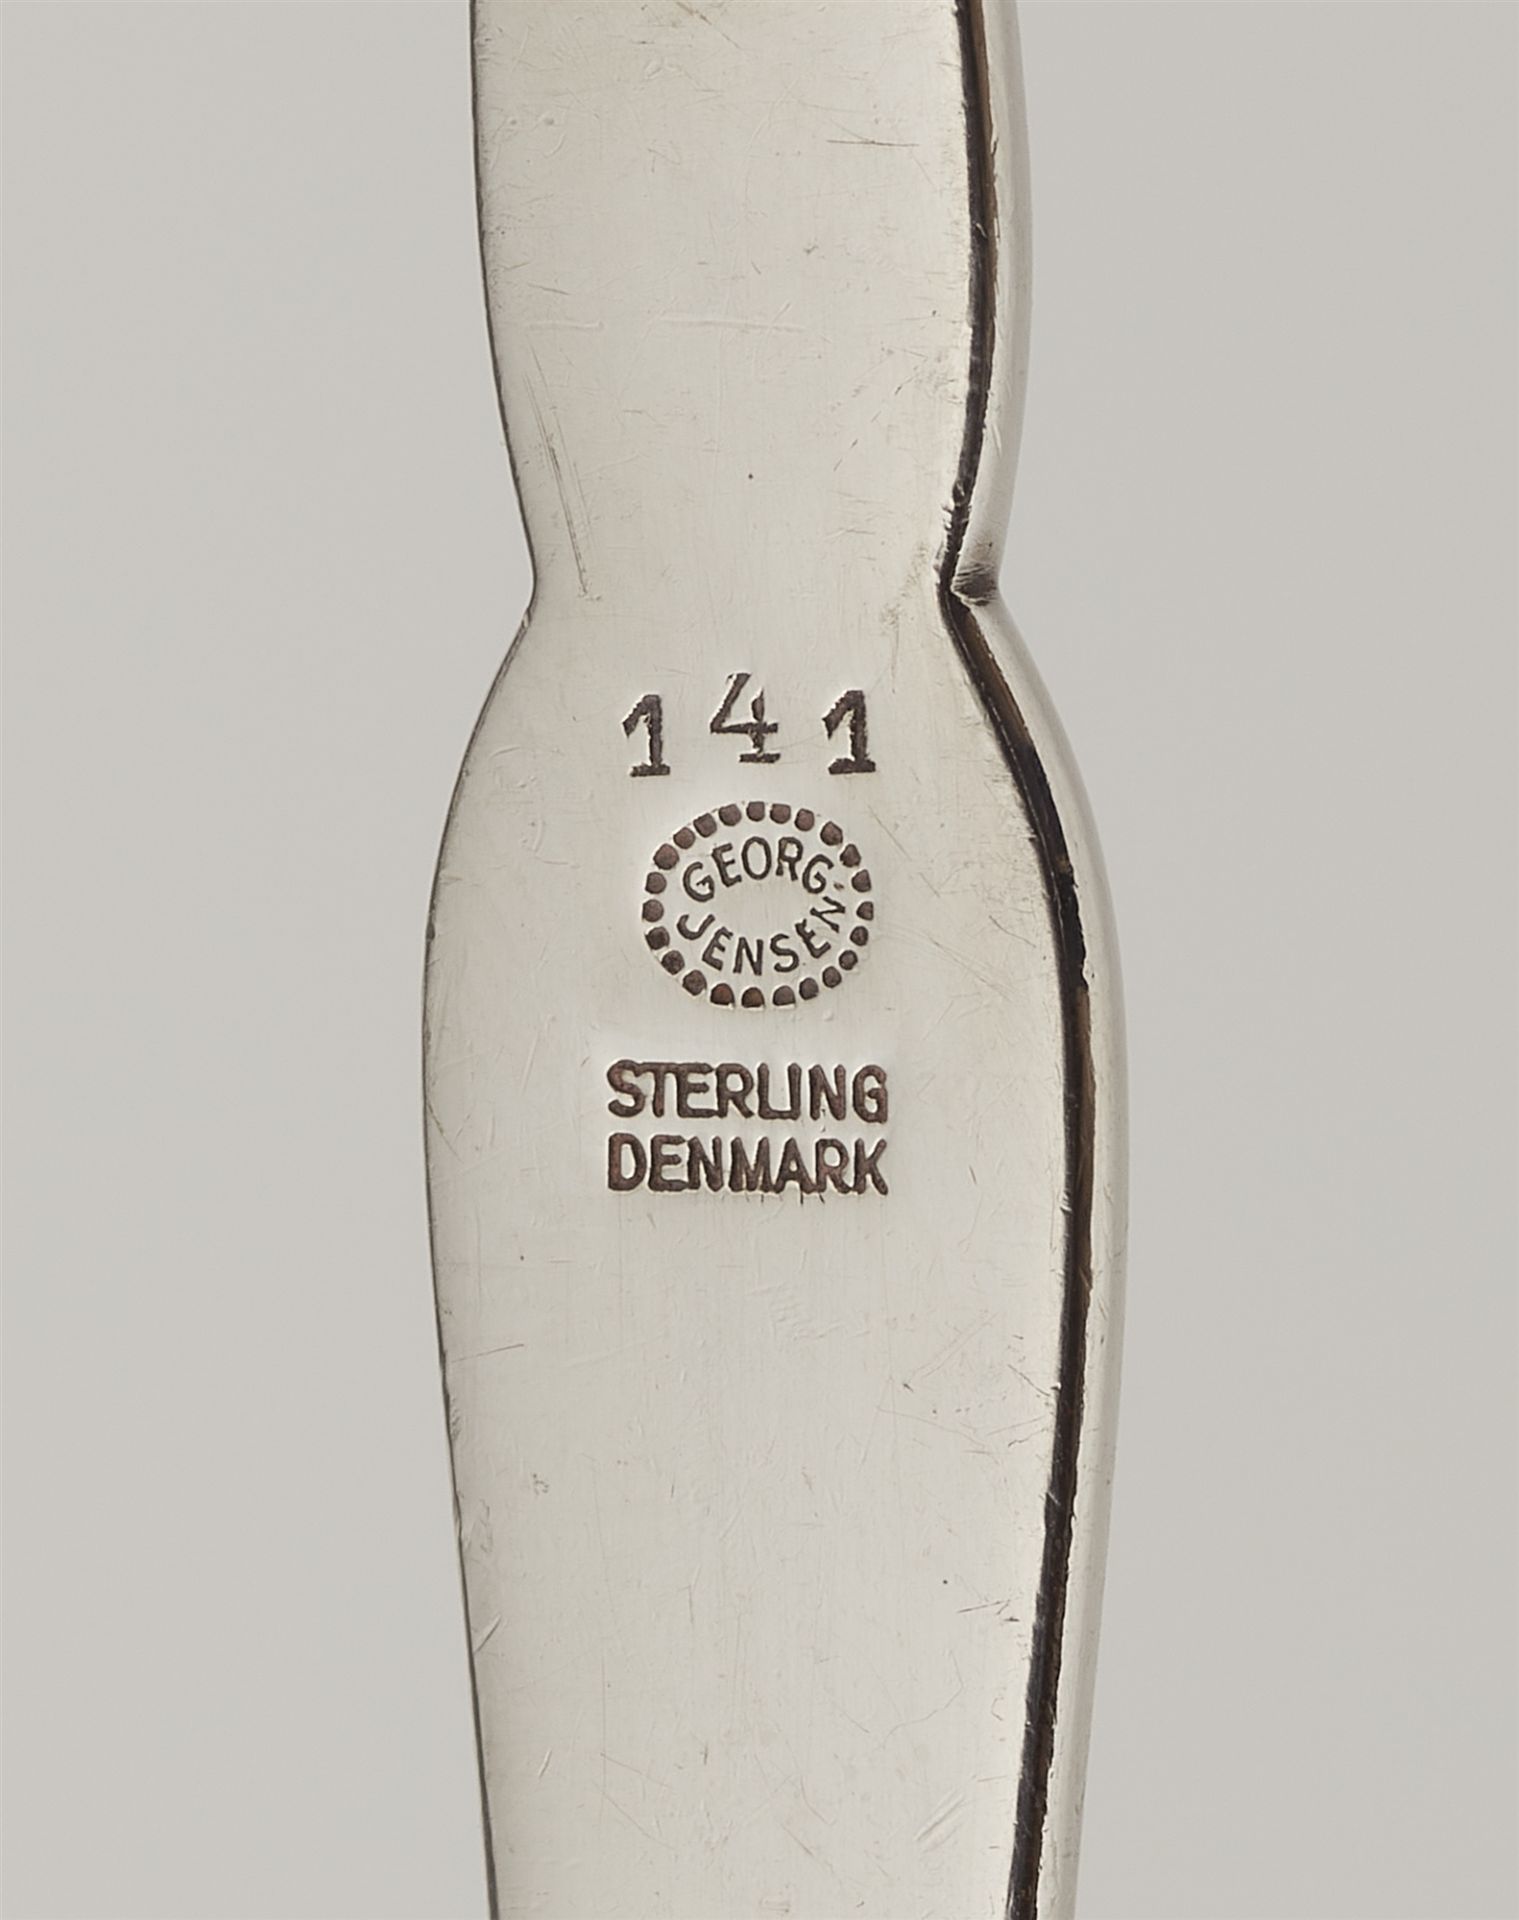 A Copenhagen silver cream spoon, model no. 141 - Image 2 of 2